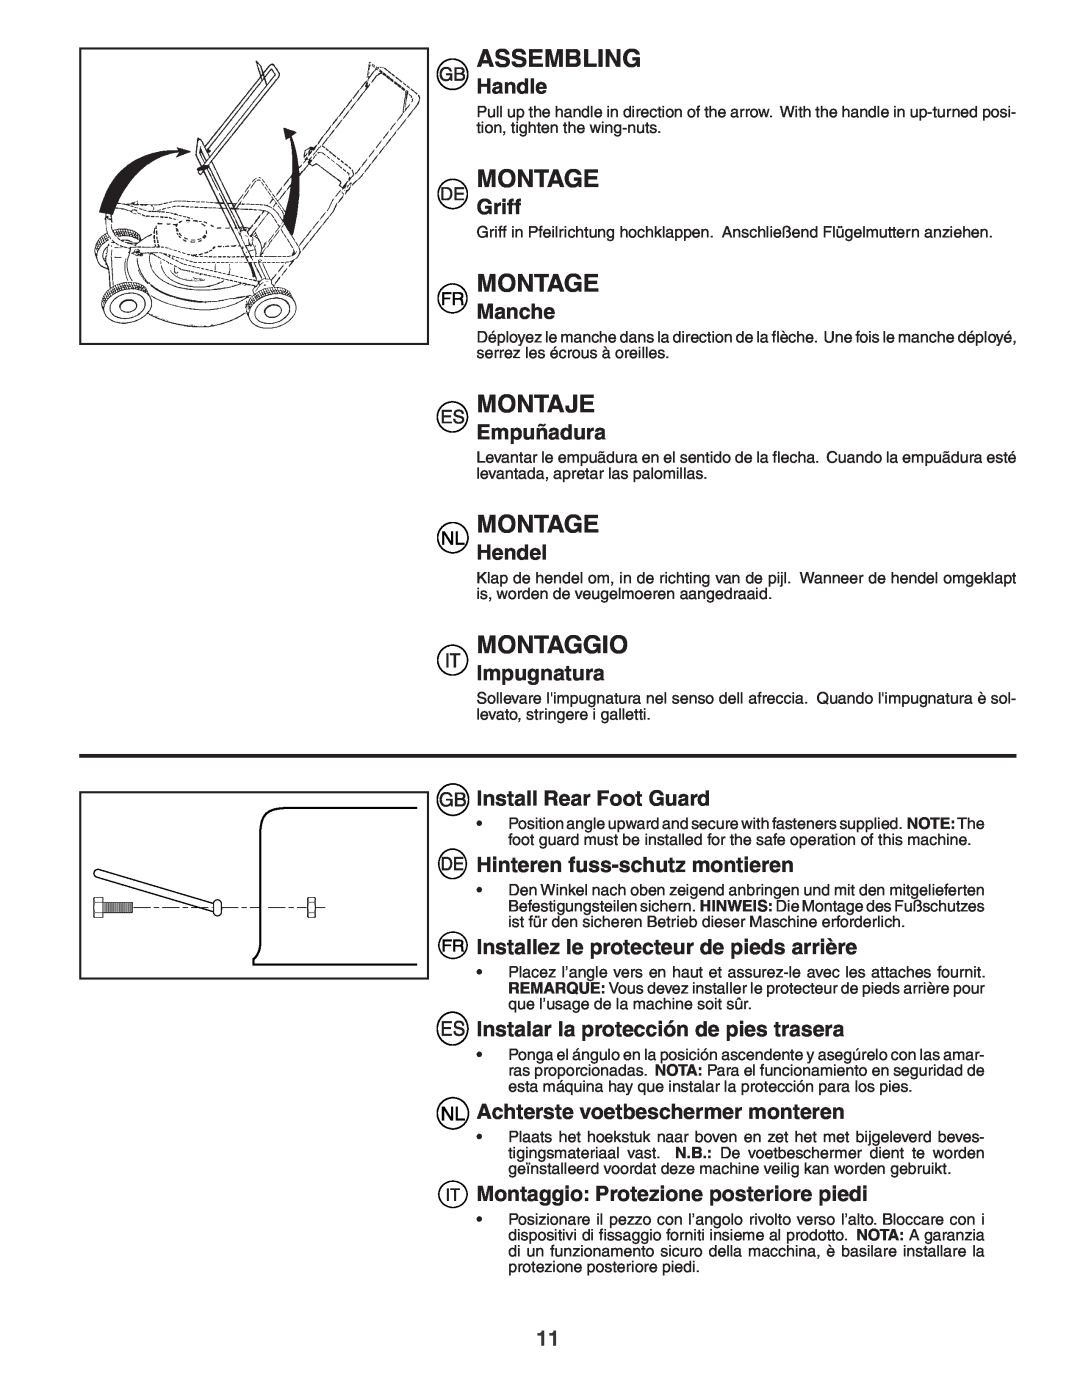 Husqvarna JET55S instruction manual Assembling, Montage, Montaje, Montaggio 